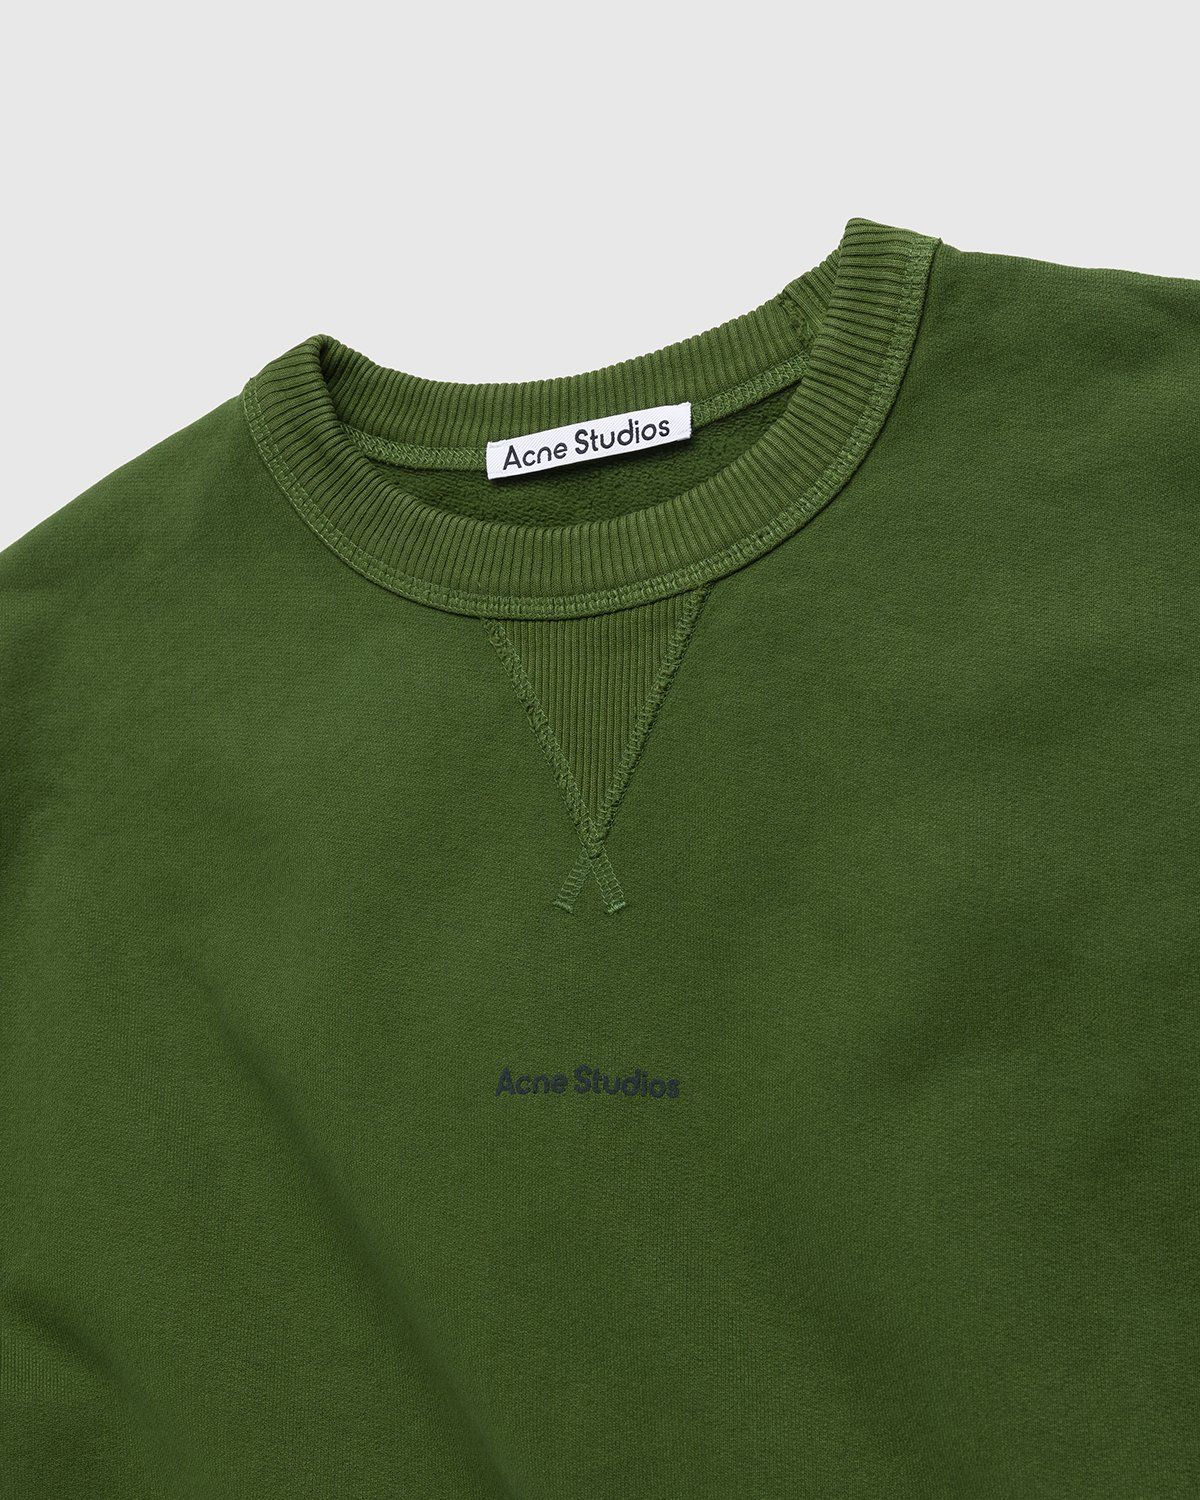 Acne Studios – Organic Cotton Crewneck Sweatshirt Bottle Green - Sweats - Green - Image 4